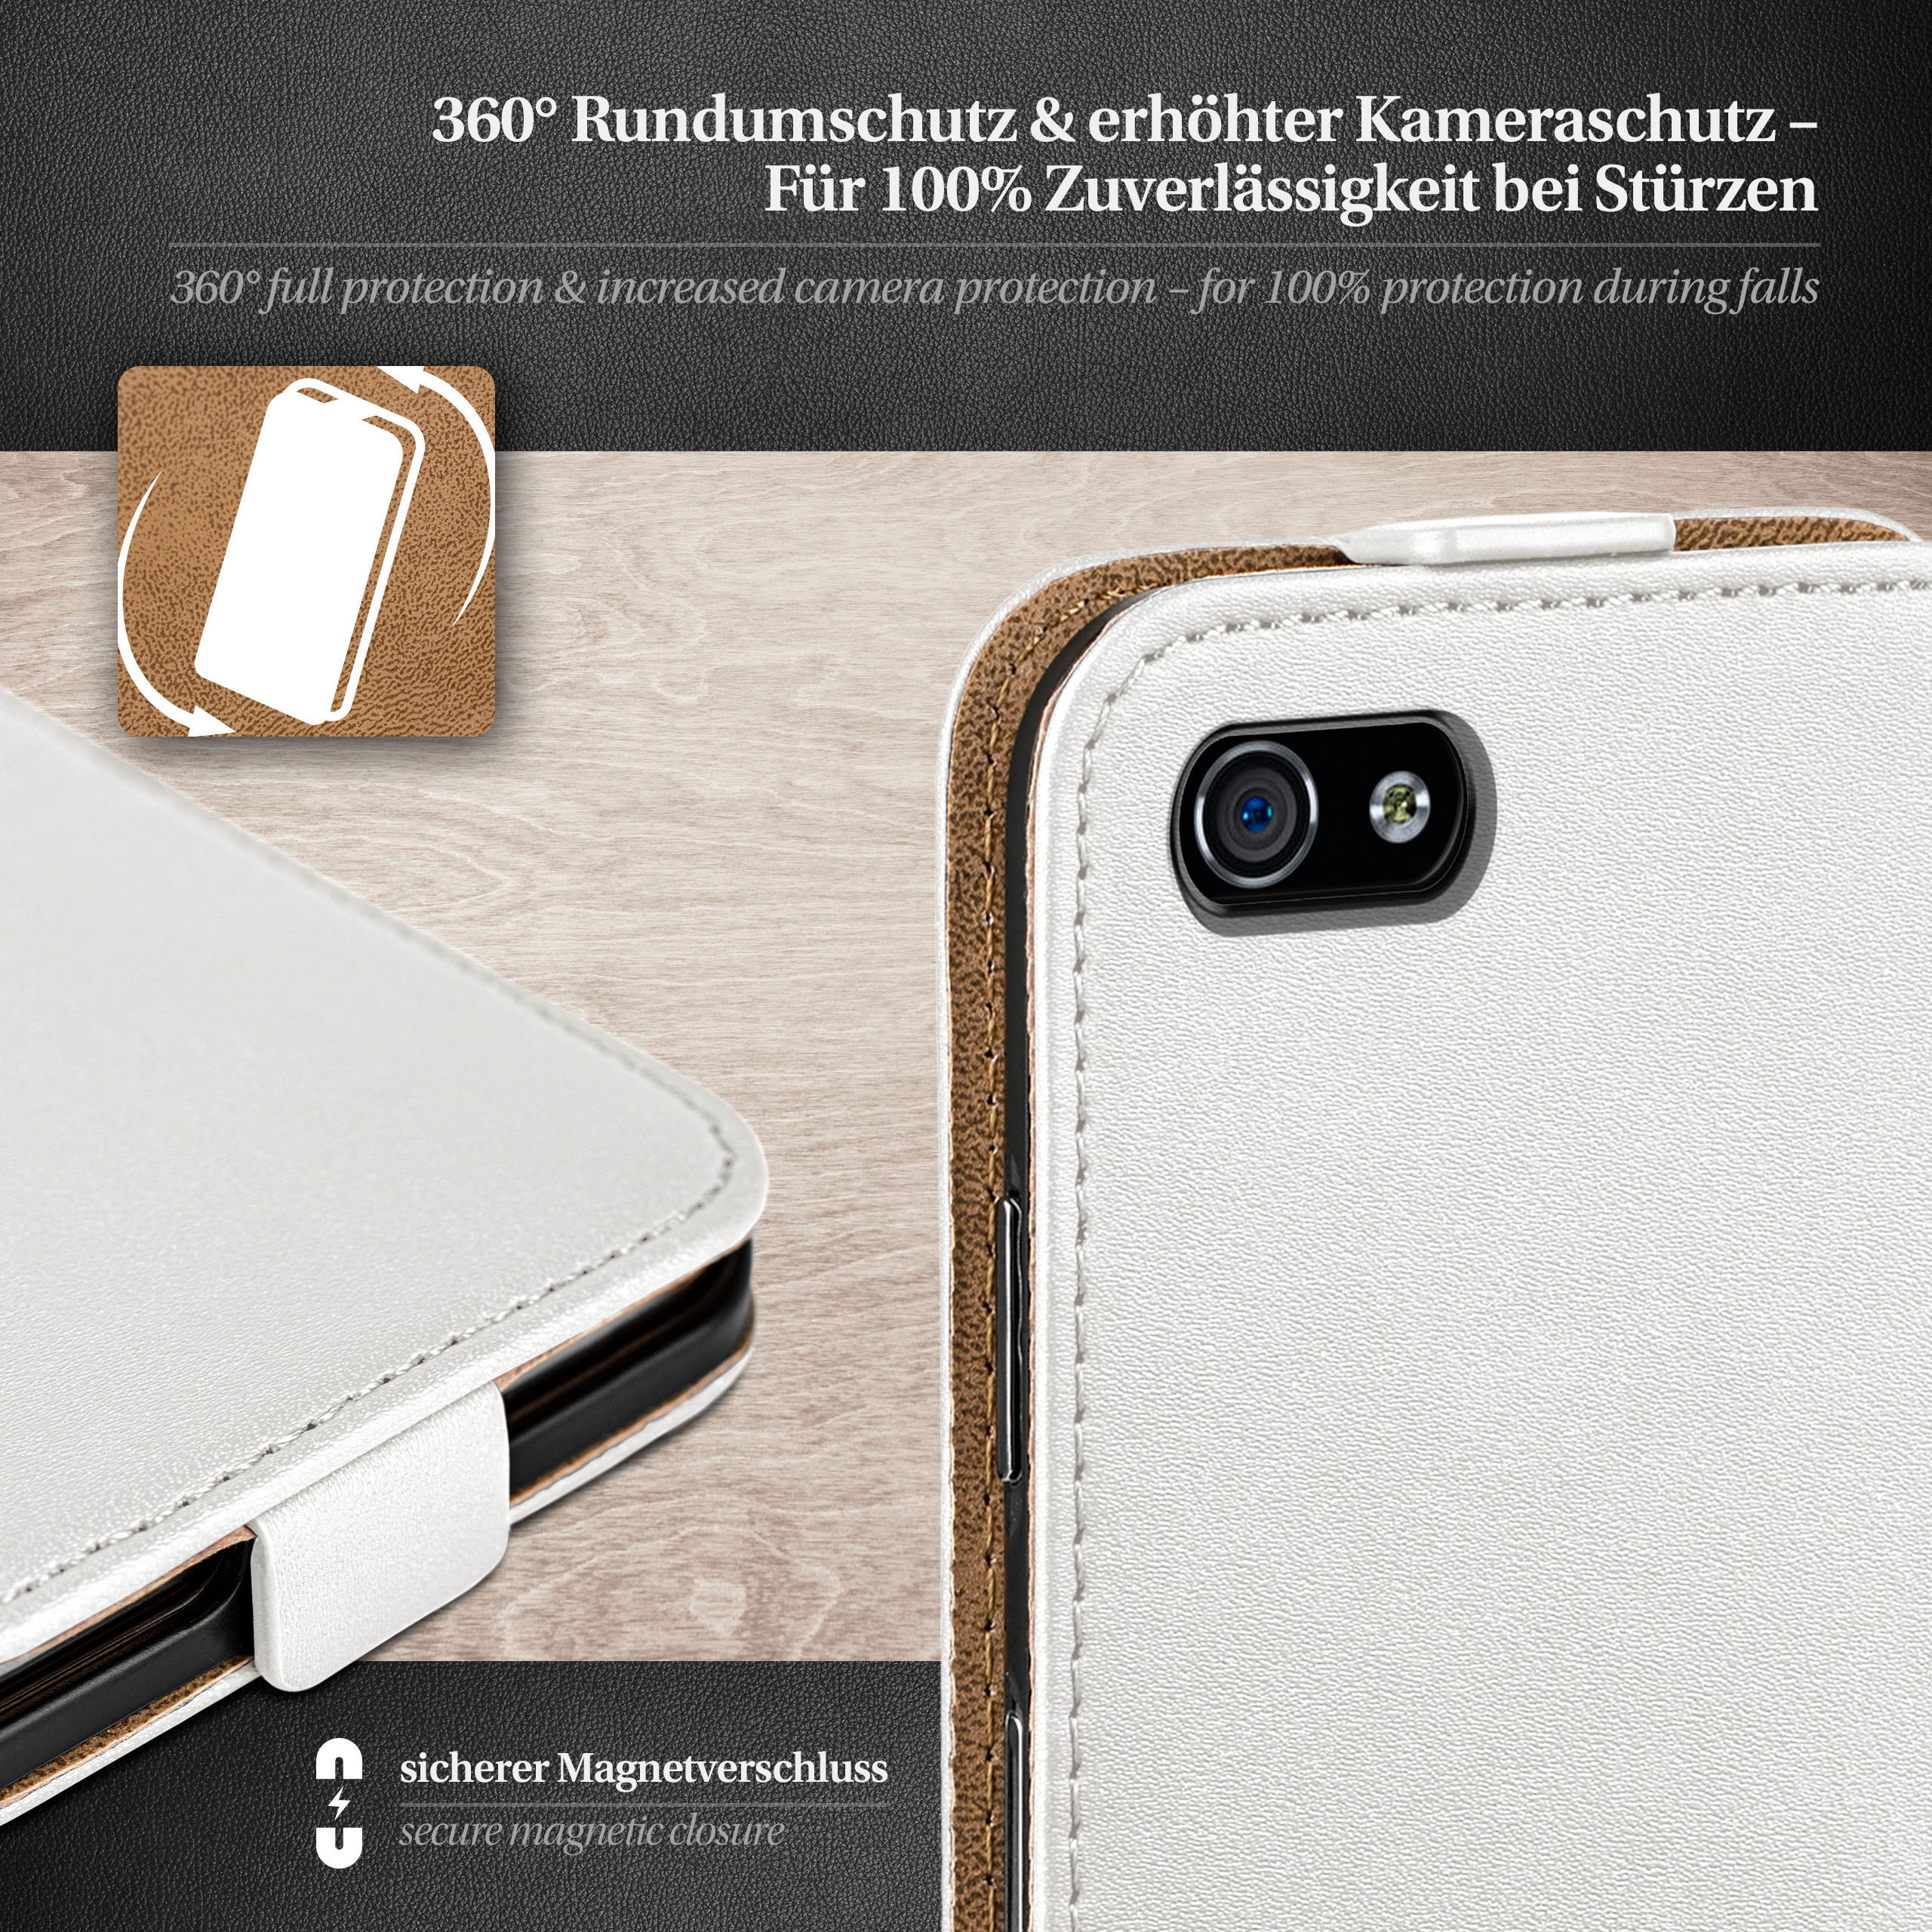 MOEX Flip Case, 4, 4s / Apple, iPhone Flip Pearl-White iPhone Cover